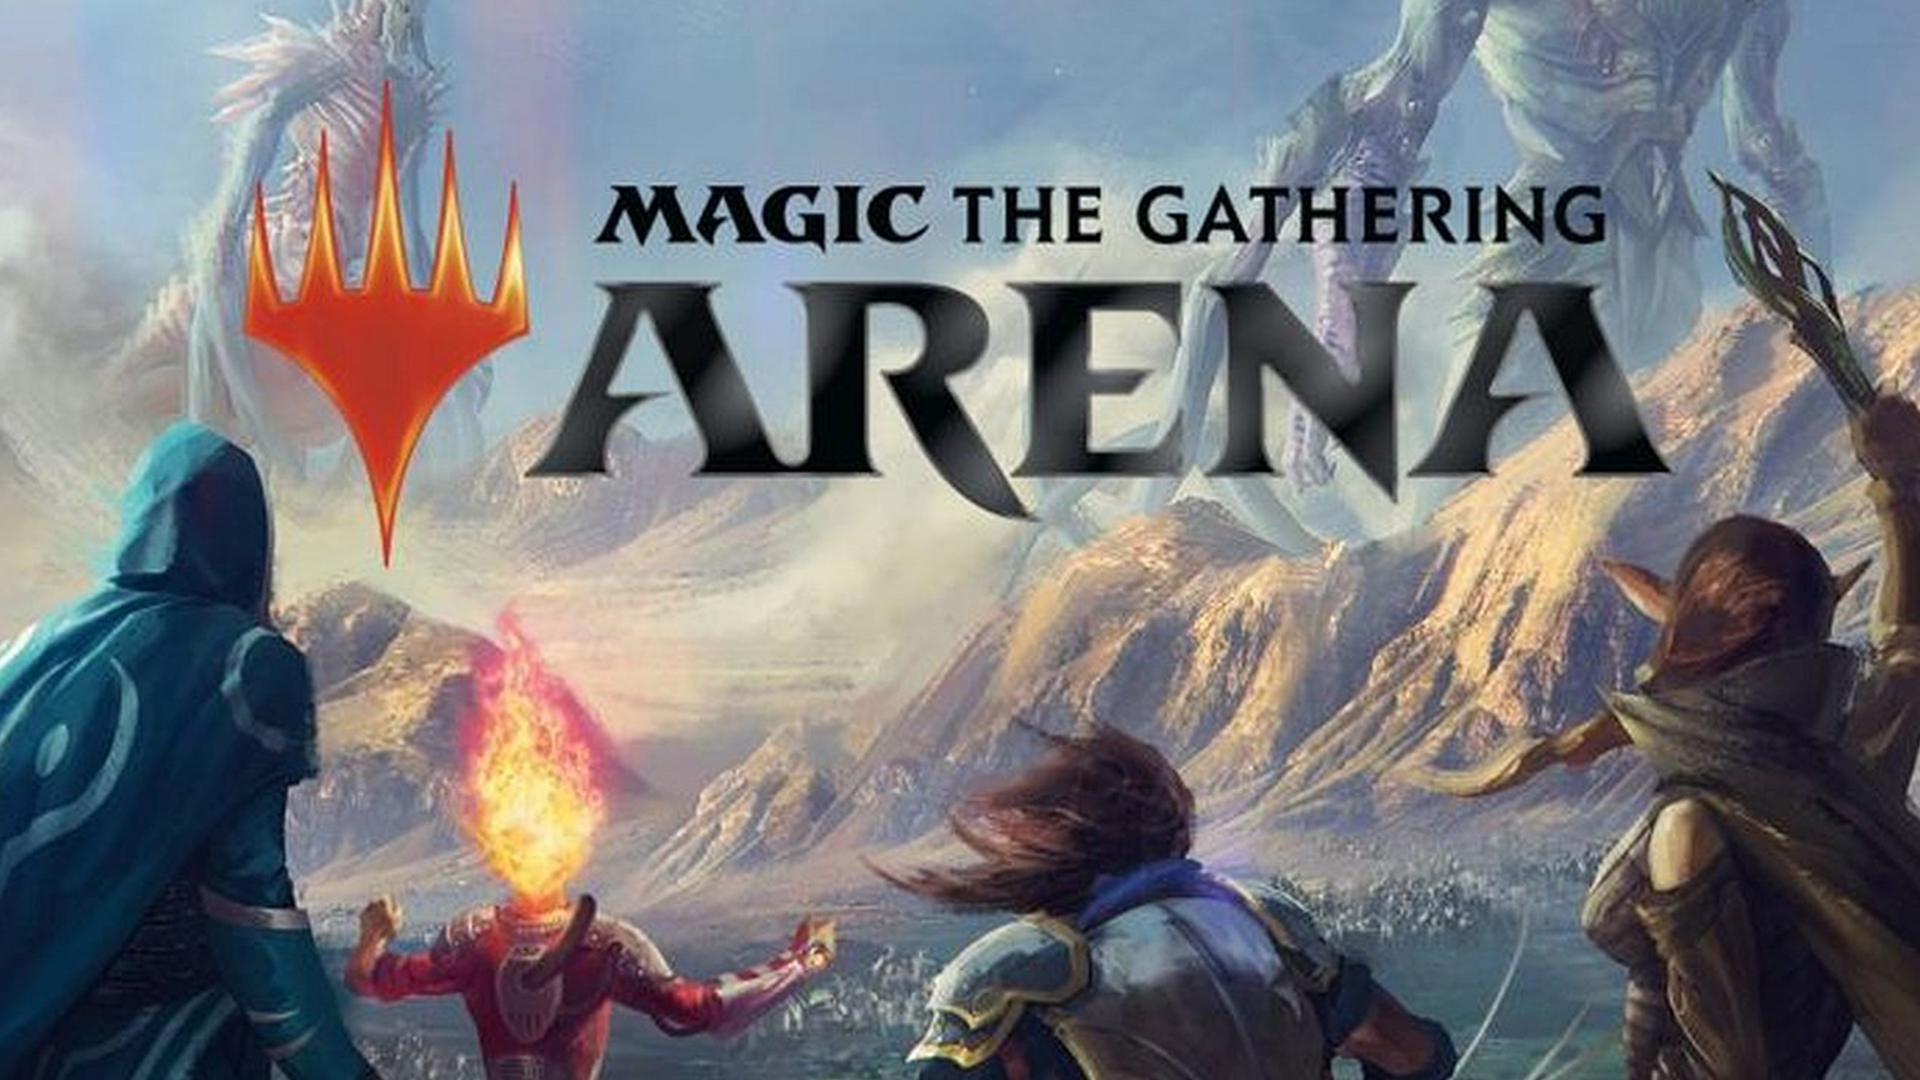 magic the gathering arena beginner guide download free